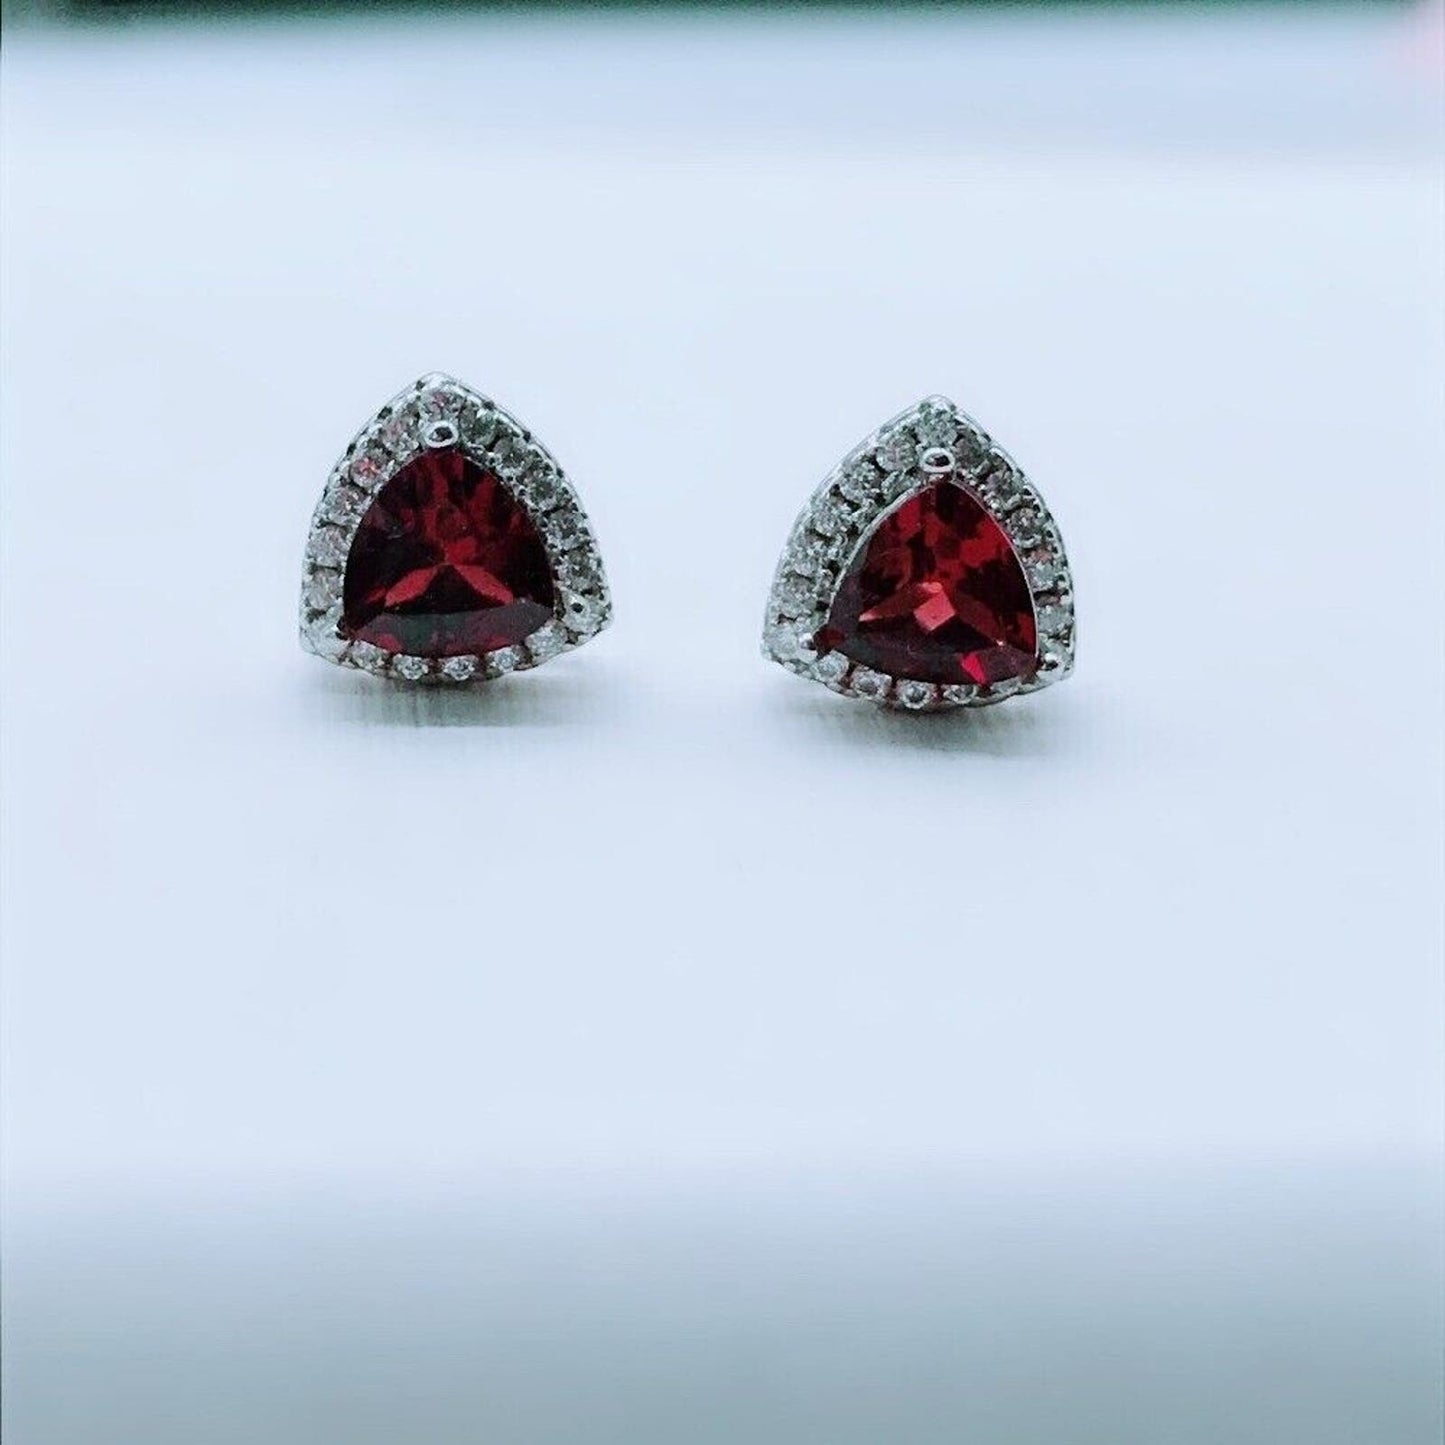 Red Garnet Gemstone Trillion Cut Stud Earrings 5mm